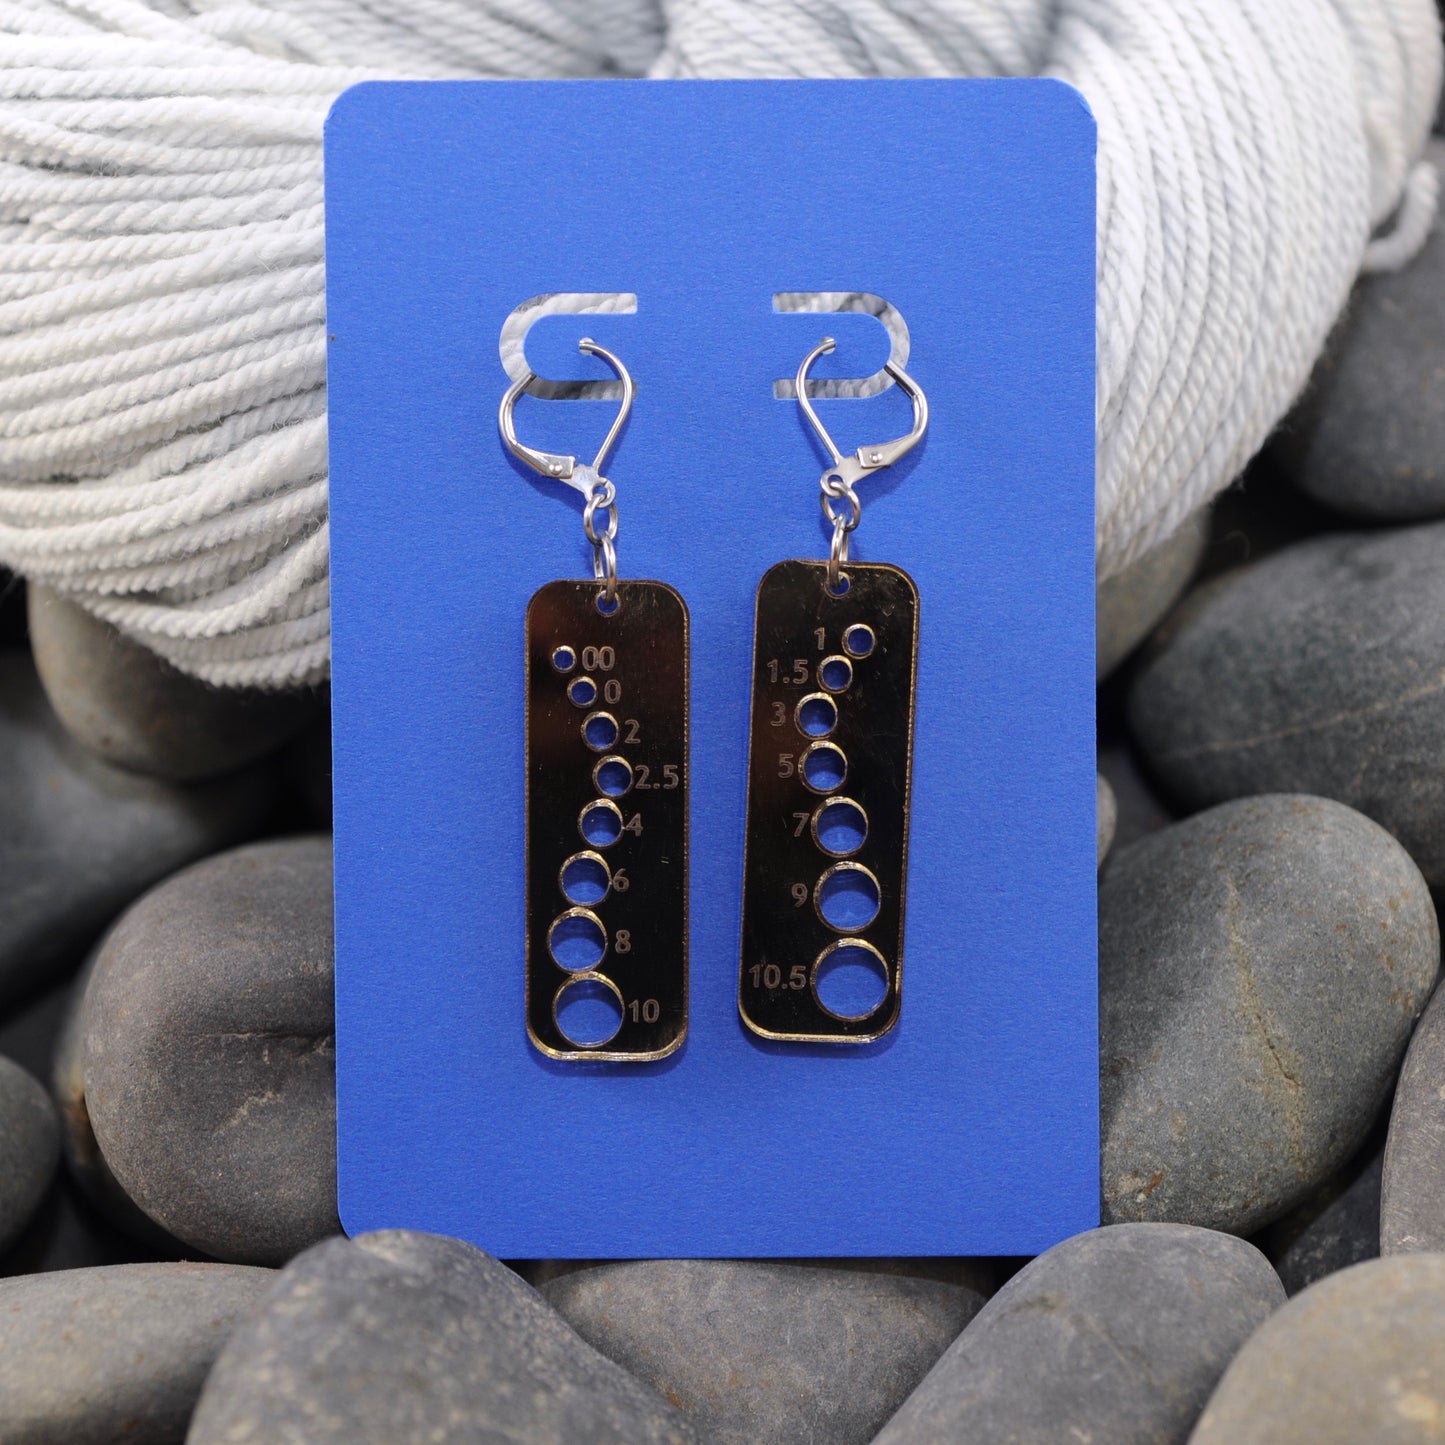 Knitting Needle Gauge Earrings - Assorted Specialty Acrylic